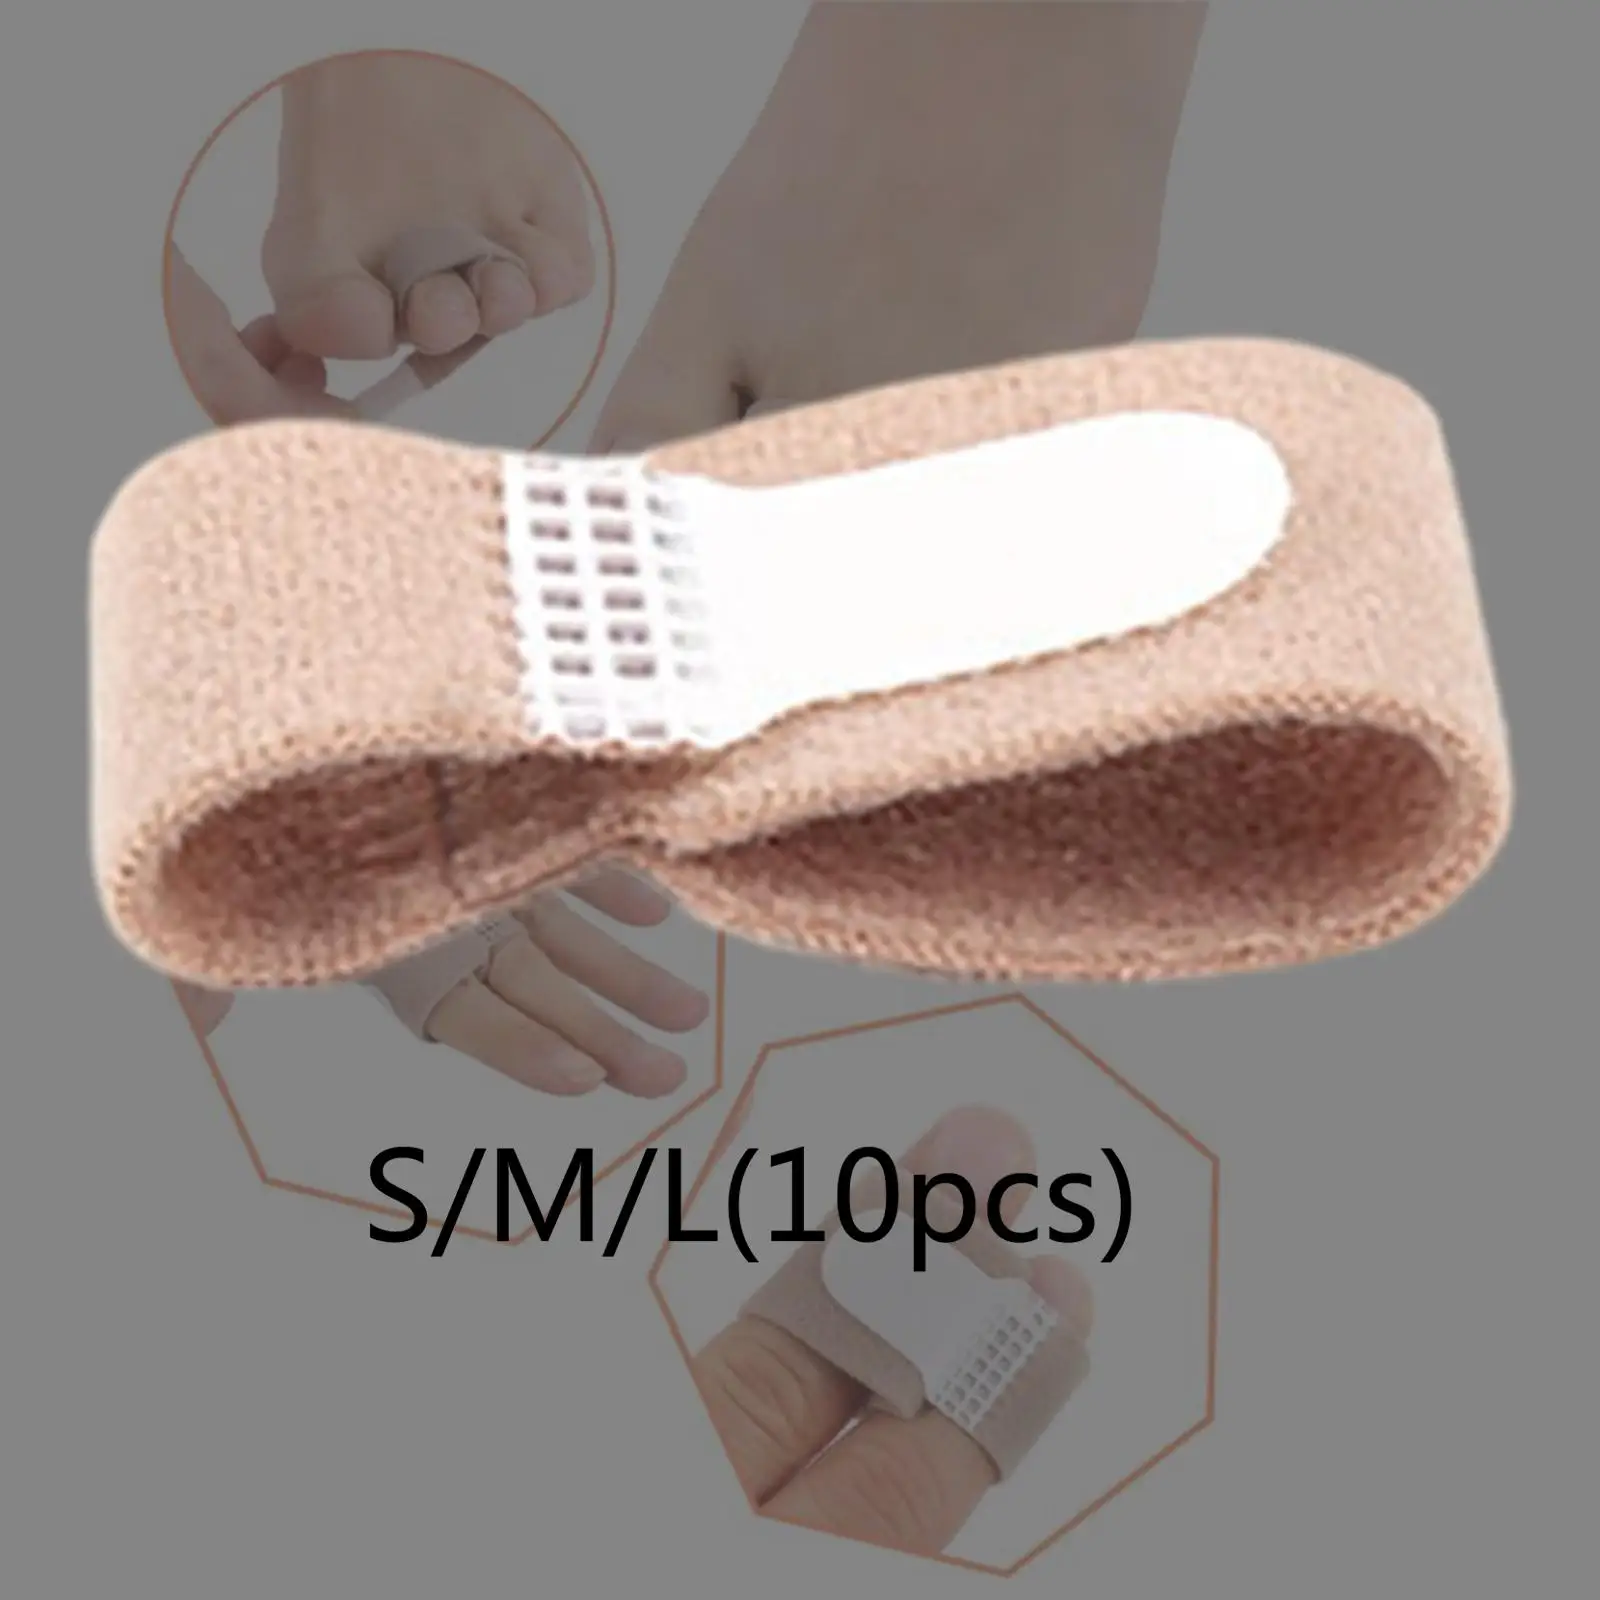 10Pcs Finger Wraps Toe Strap Bandage Compression Reusable Adjustable Elastic